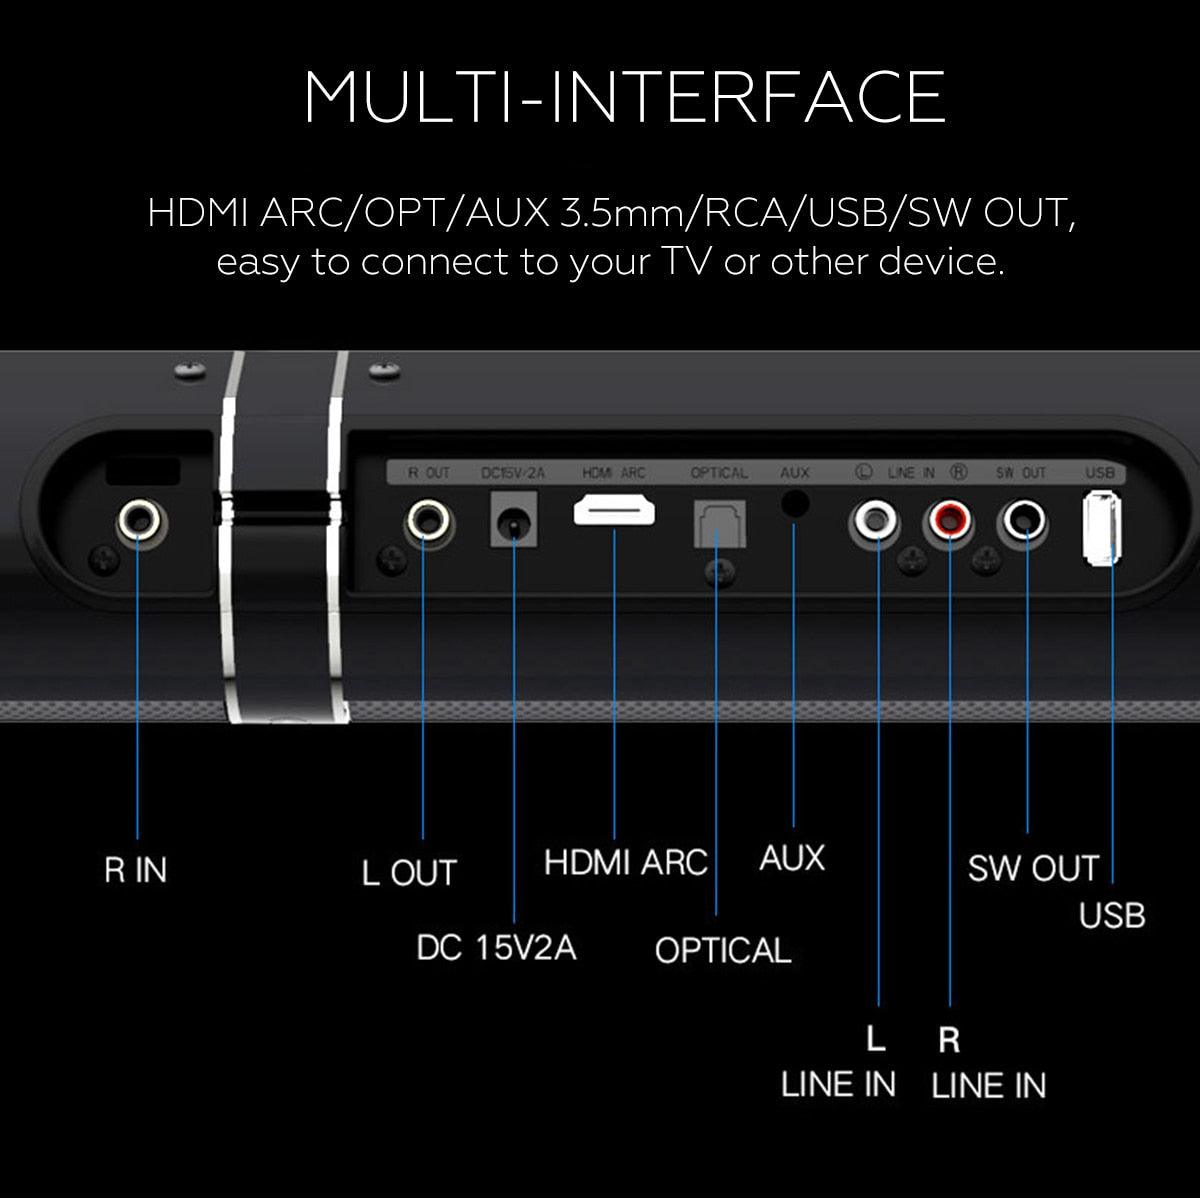 50W 100cm HiFi Detachable Wireless bluetooth Soundbar Speaker 3D Surround Stereo Subwoofer (HA5)(1U57)